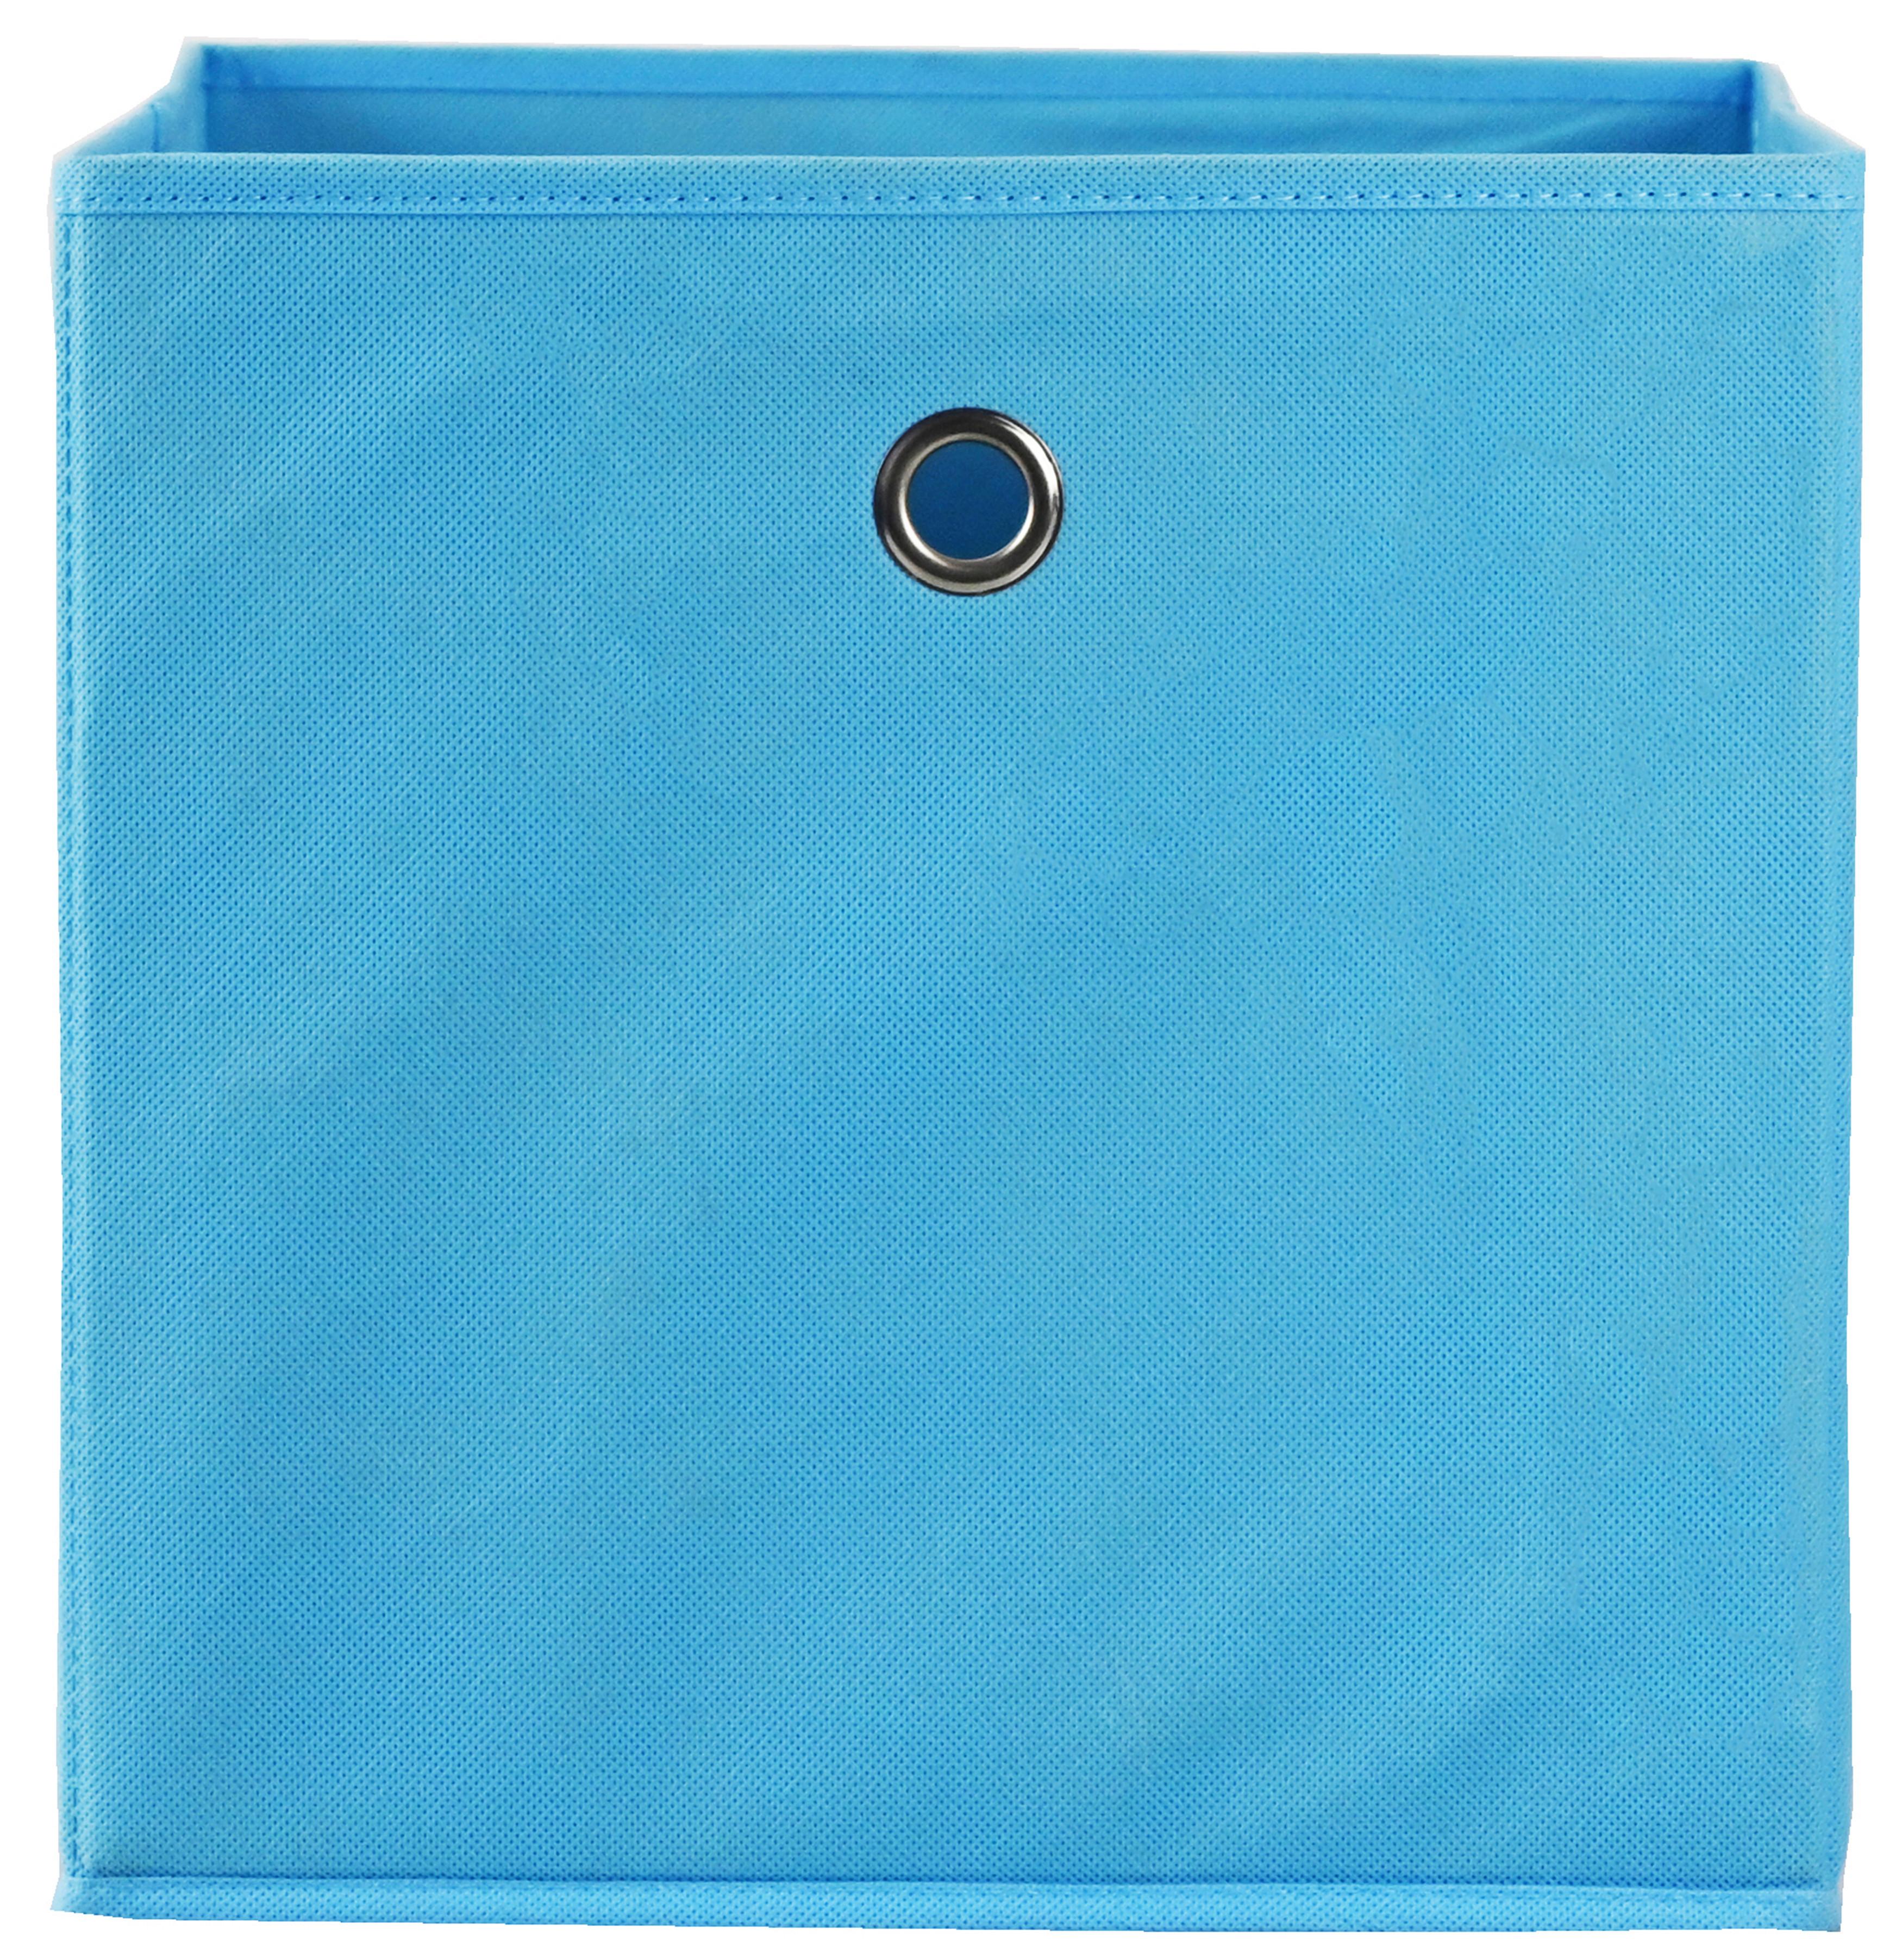 Zložljiv Zaboj Fibi -Ext- - svetlo modra, Konvencionalno, karton/tekstil (30/30/30cm) - Modern Living